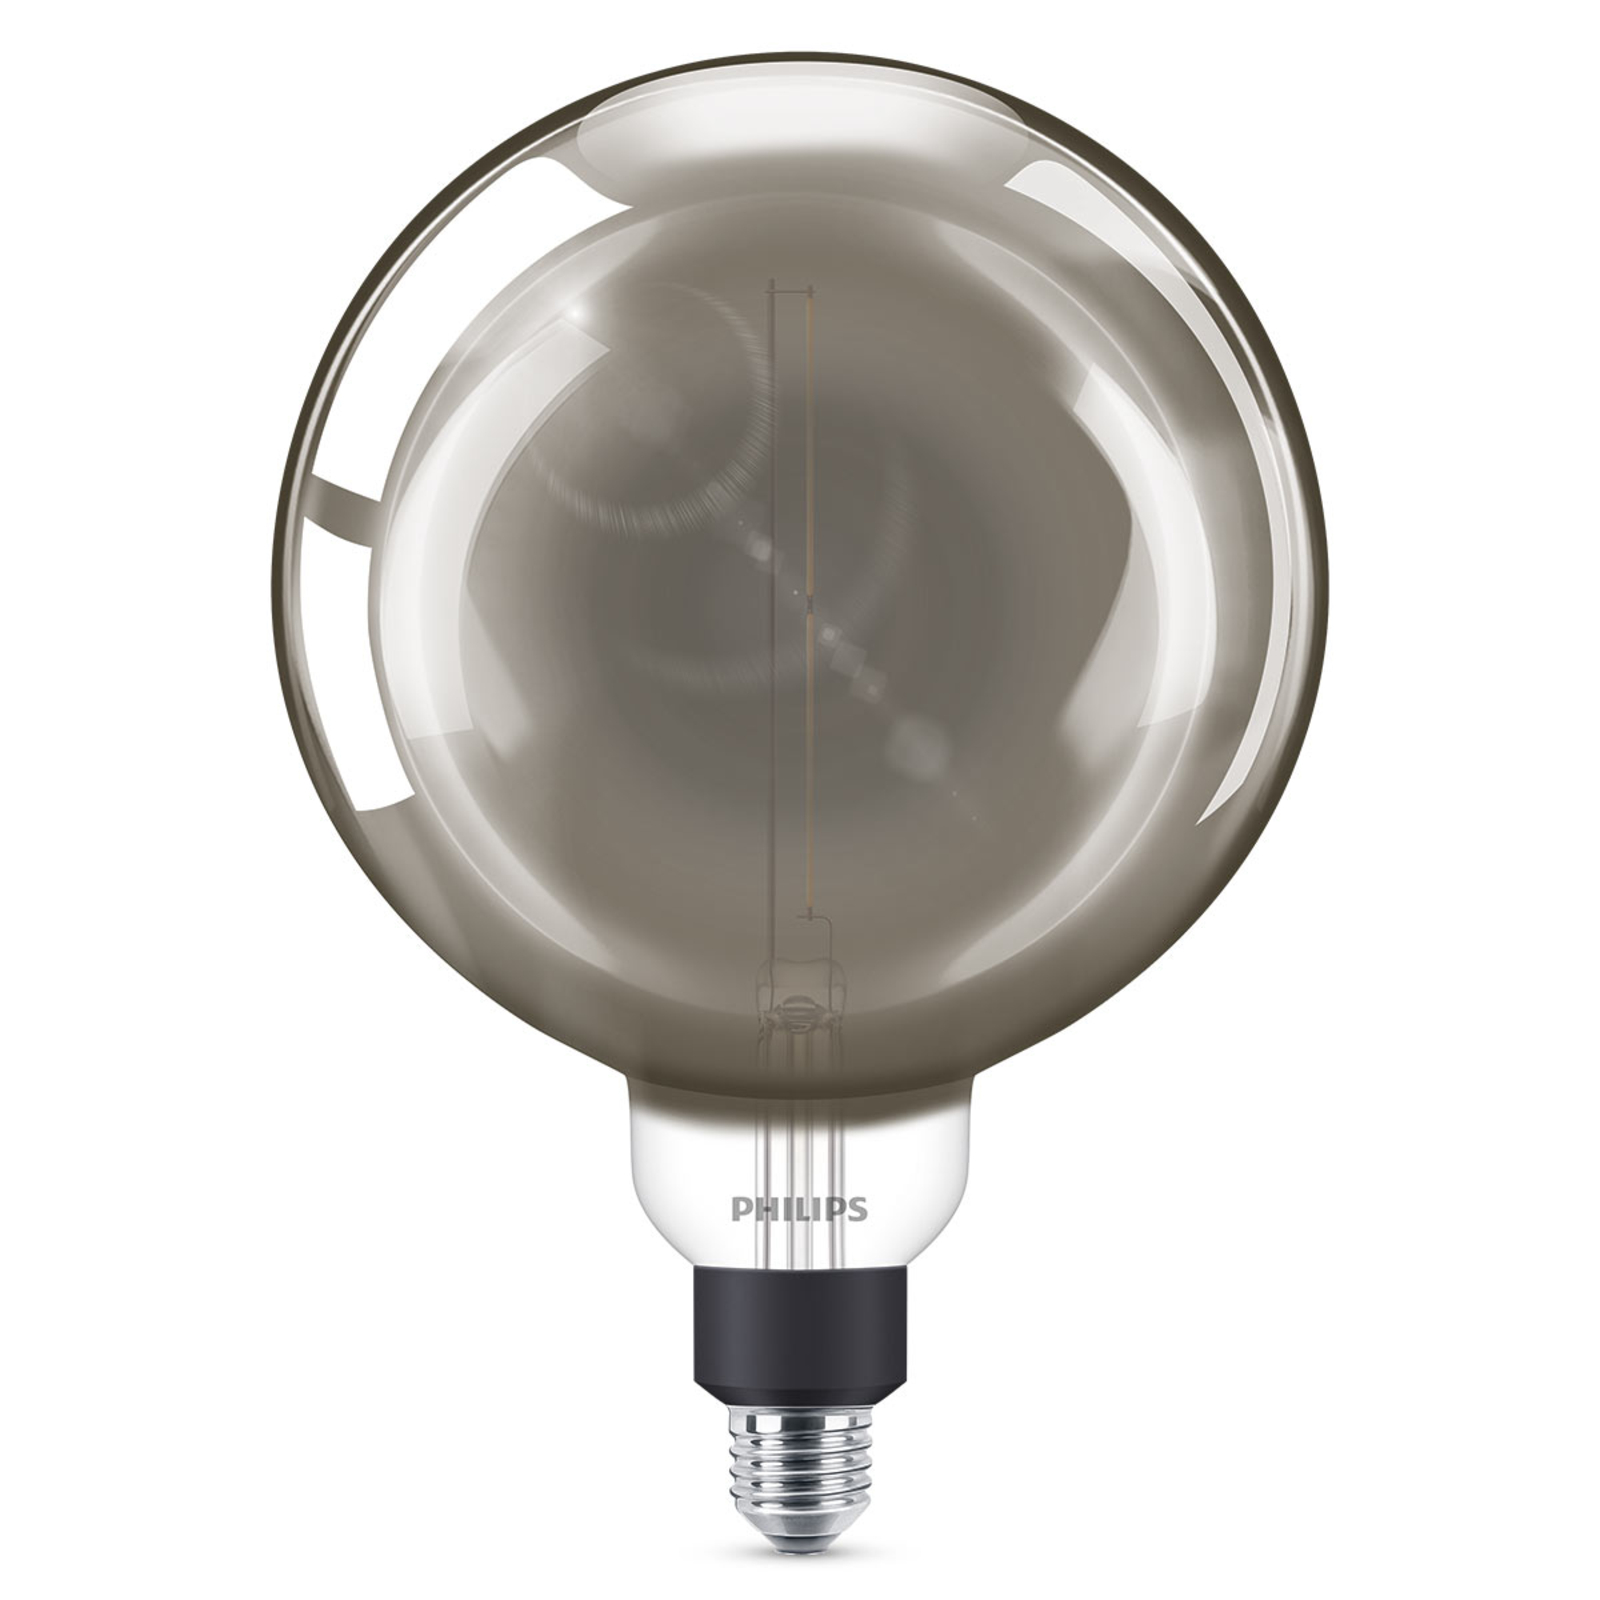 Philips E27 Giant bombilla LED globo 6,5W, humo